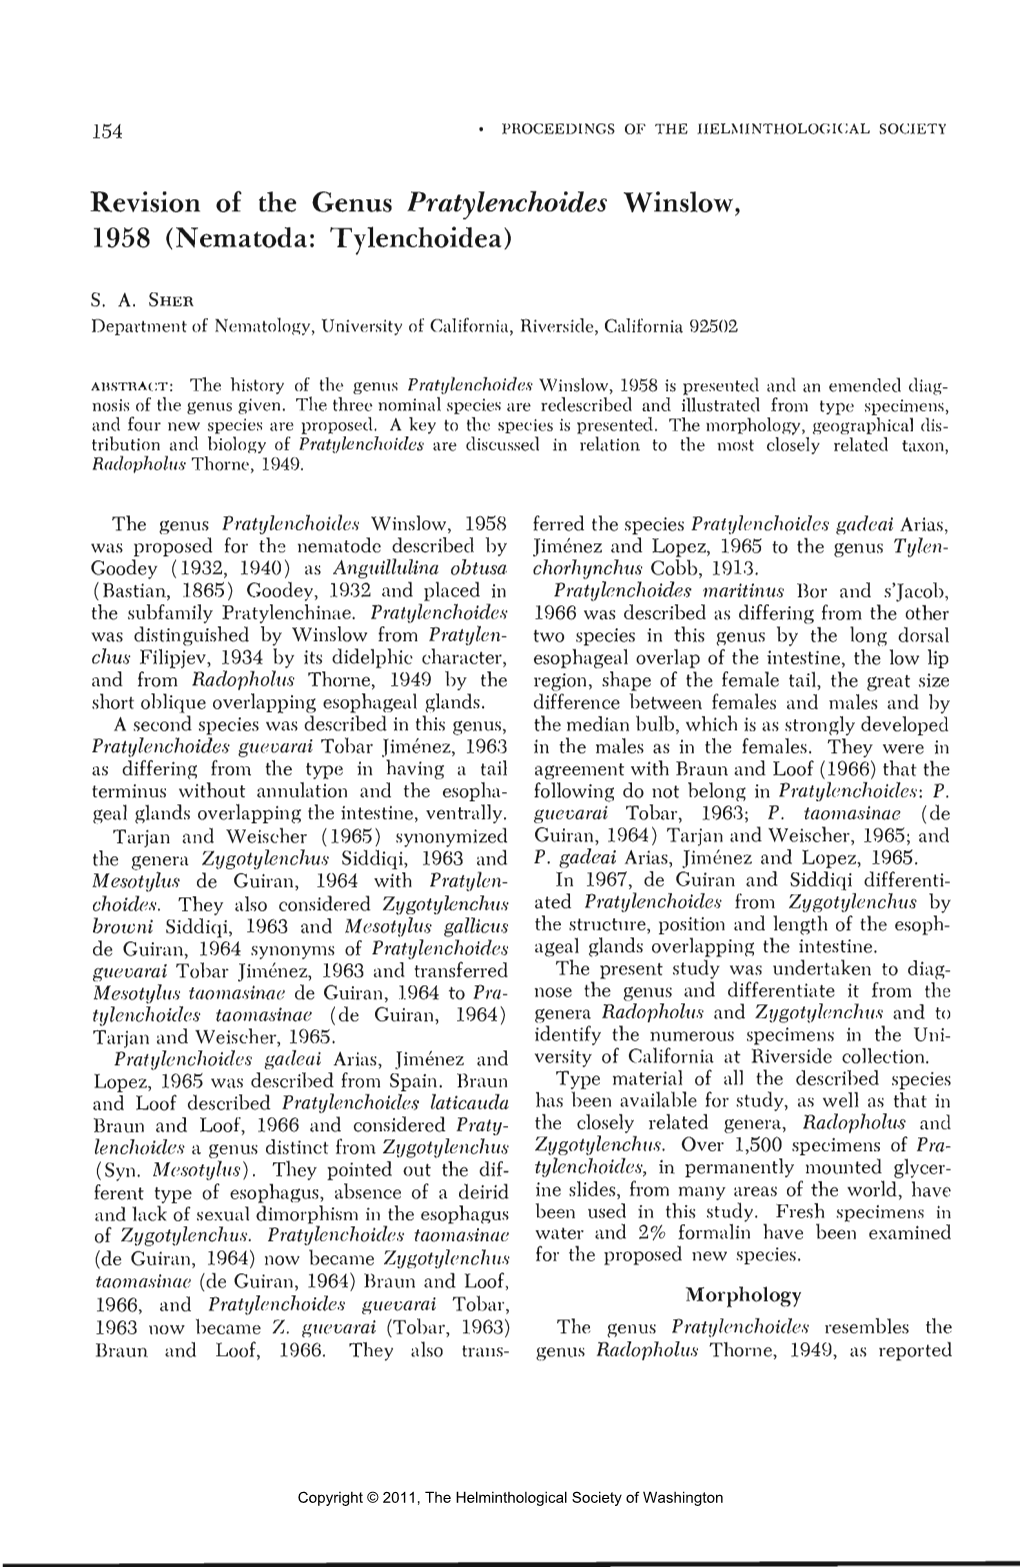 Revision of the Genus Pratylenchoides Winslow, 1958 (Nematoda: Tylenchoidea)